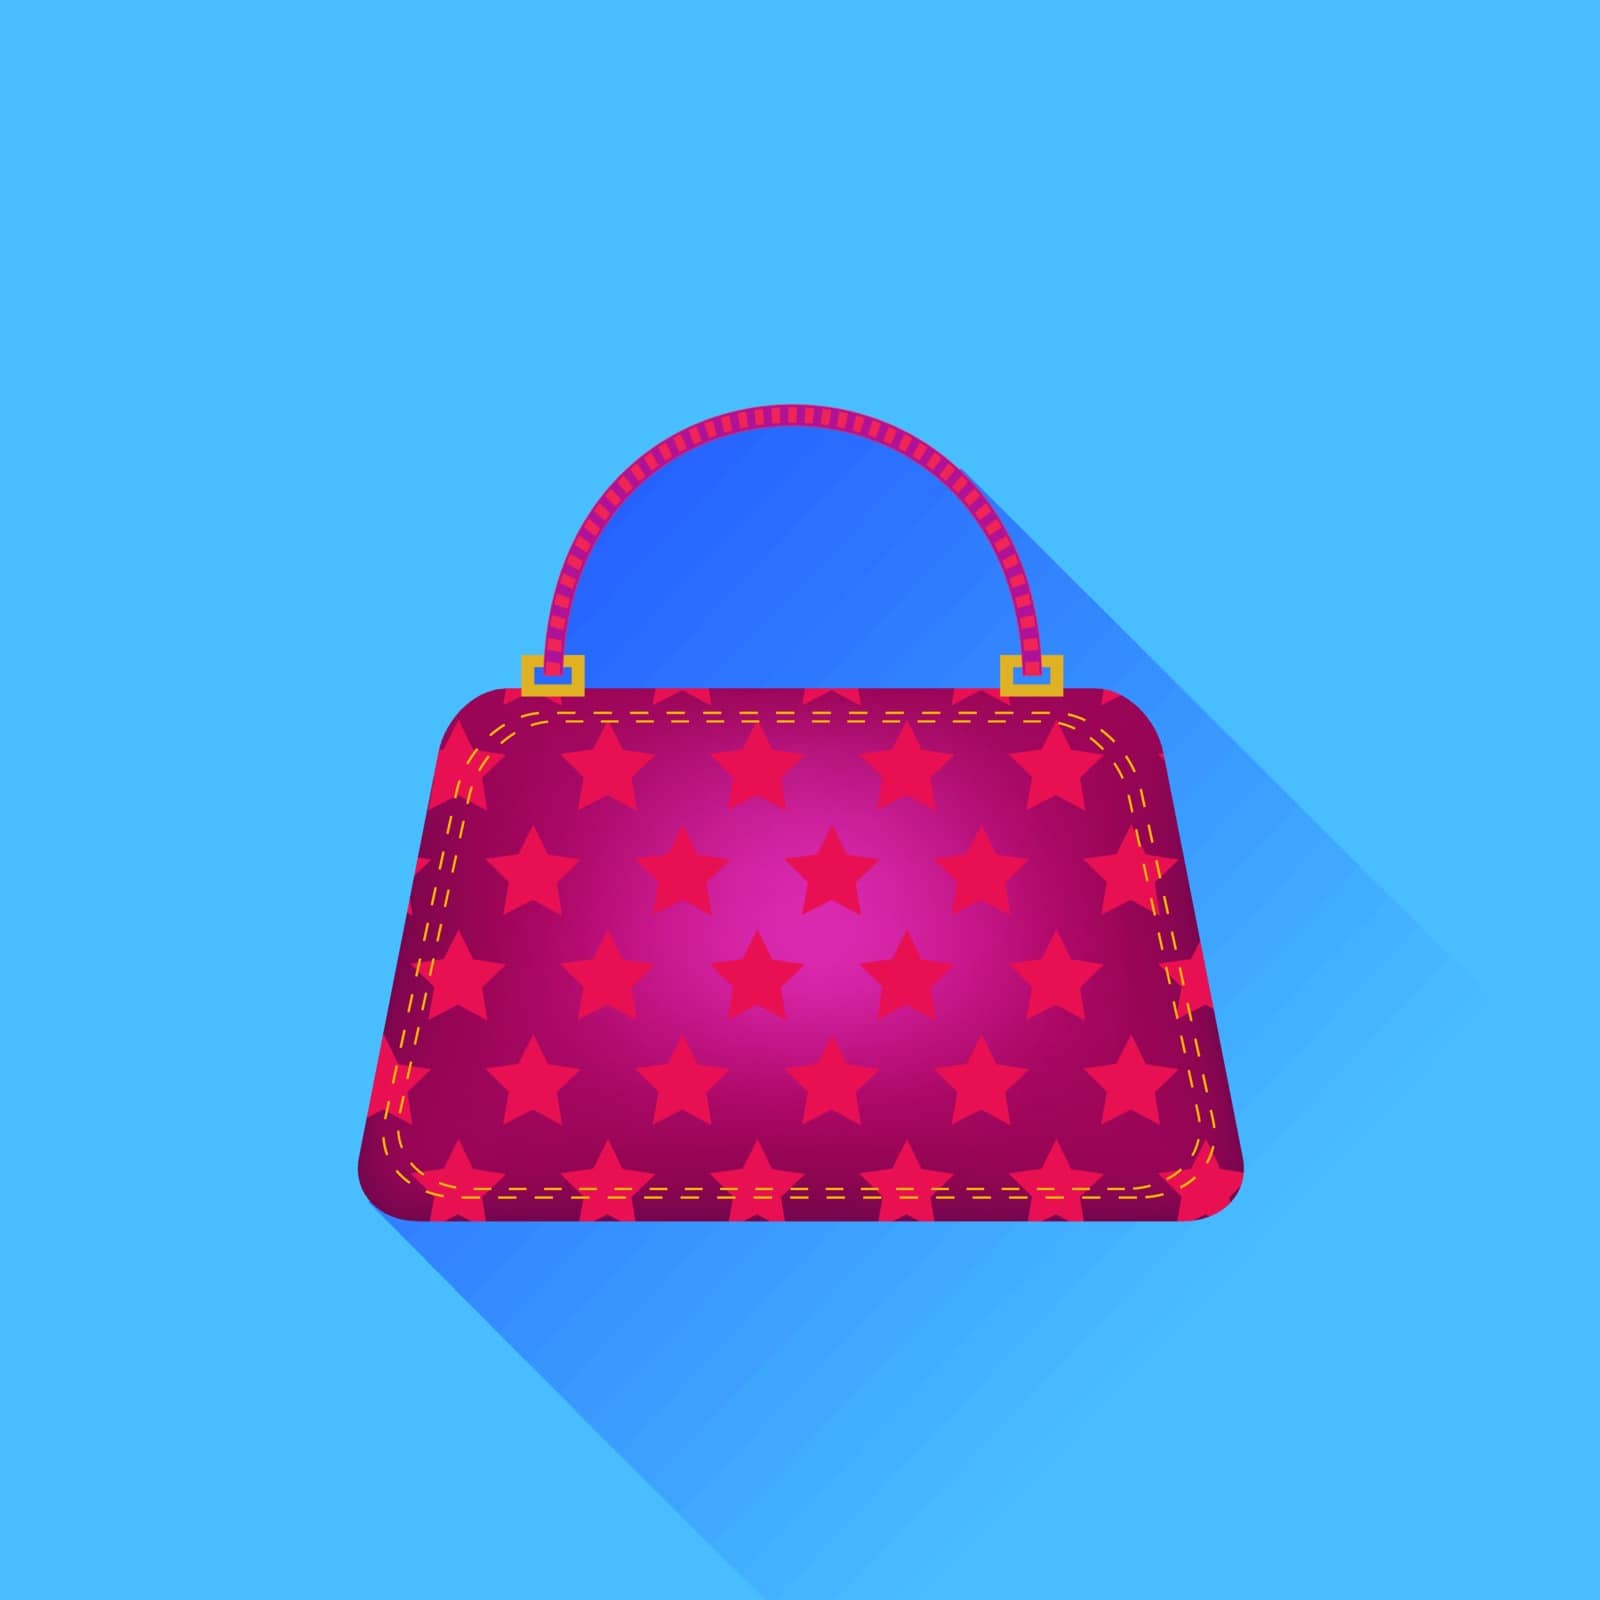 Red Handbag by valeo5